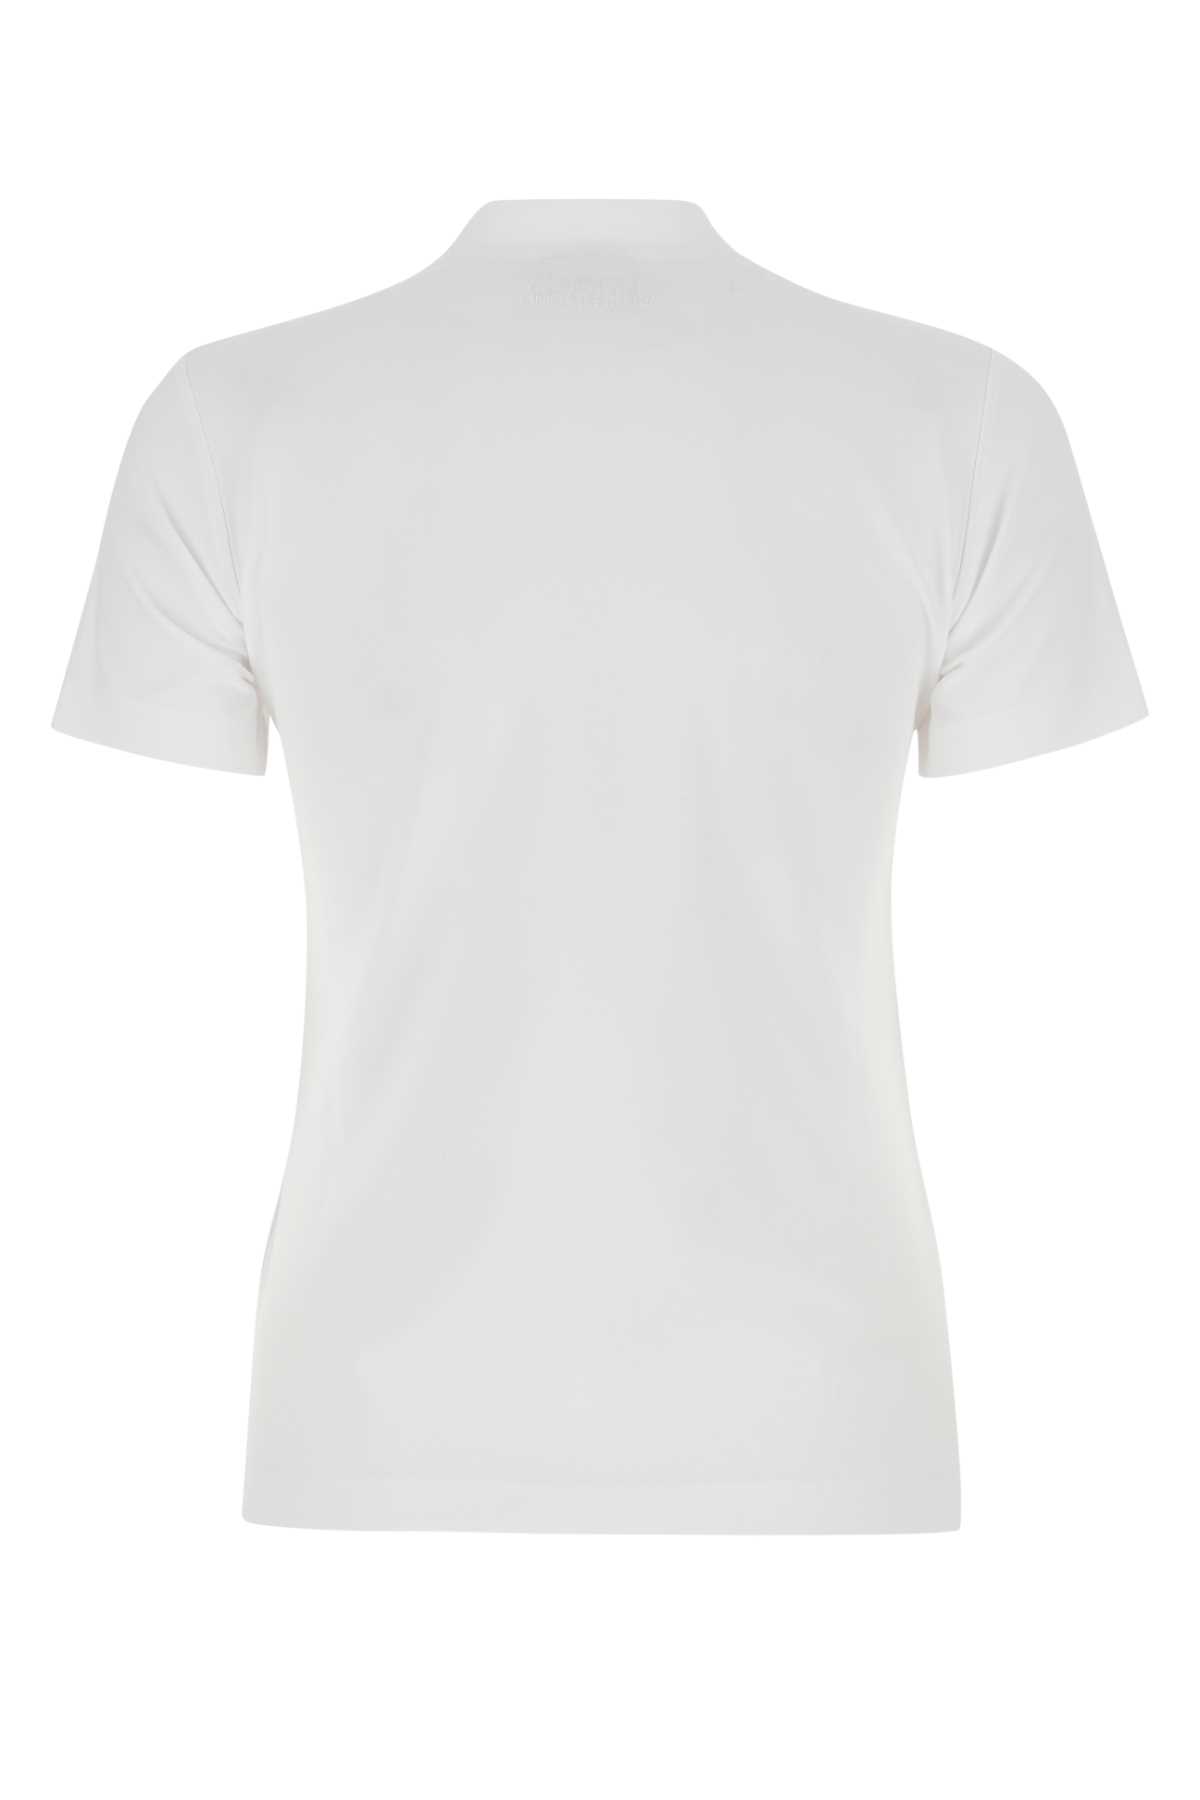 Vetements White Cotton T-shirt